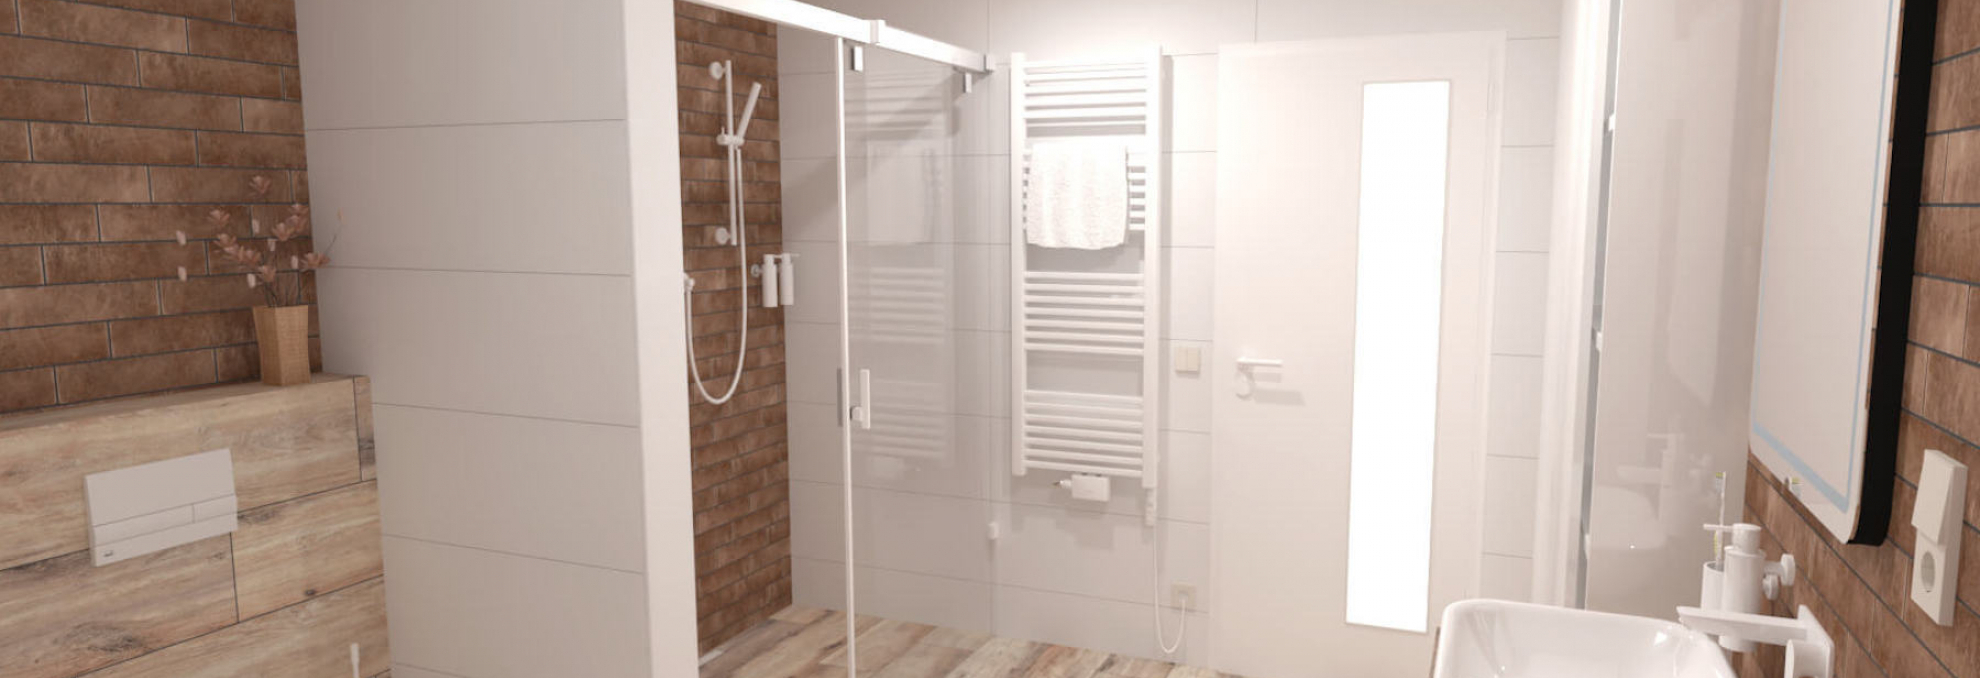 Vizualizace koupelny v designu dřeva Planches de Rex